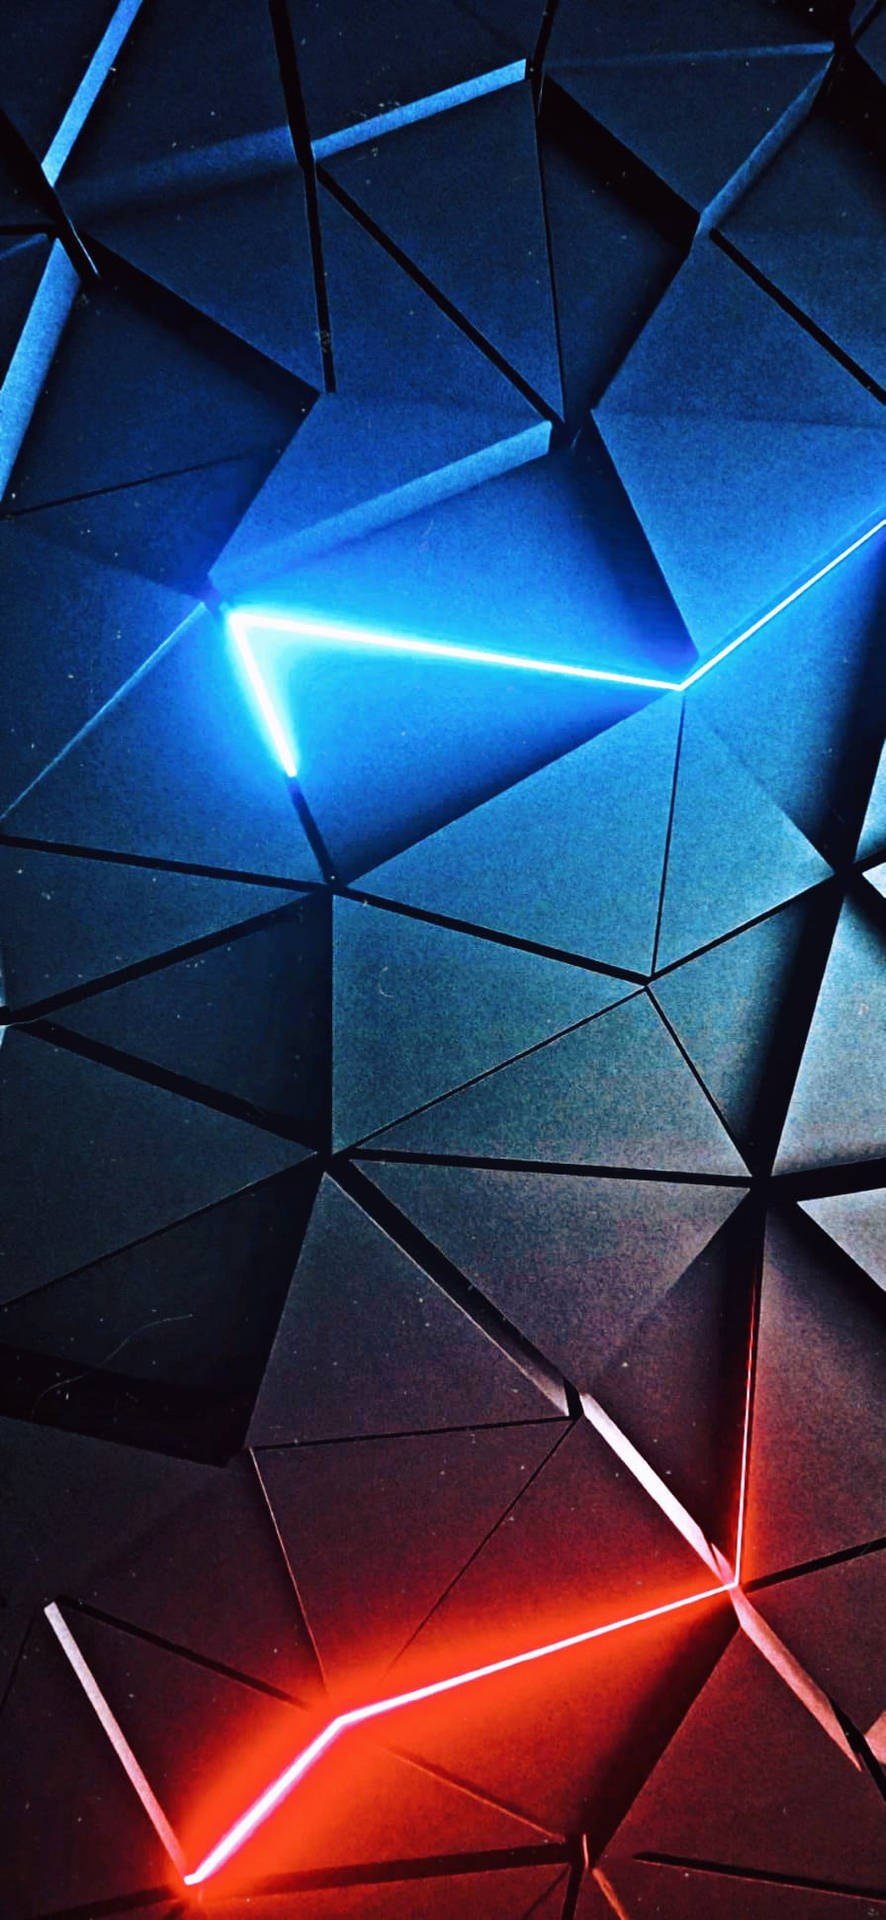 Triangular Abstract Neon Aesthetic Iphone Wallpaper